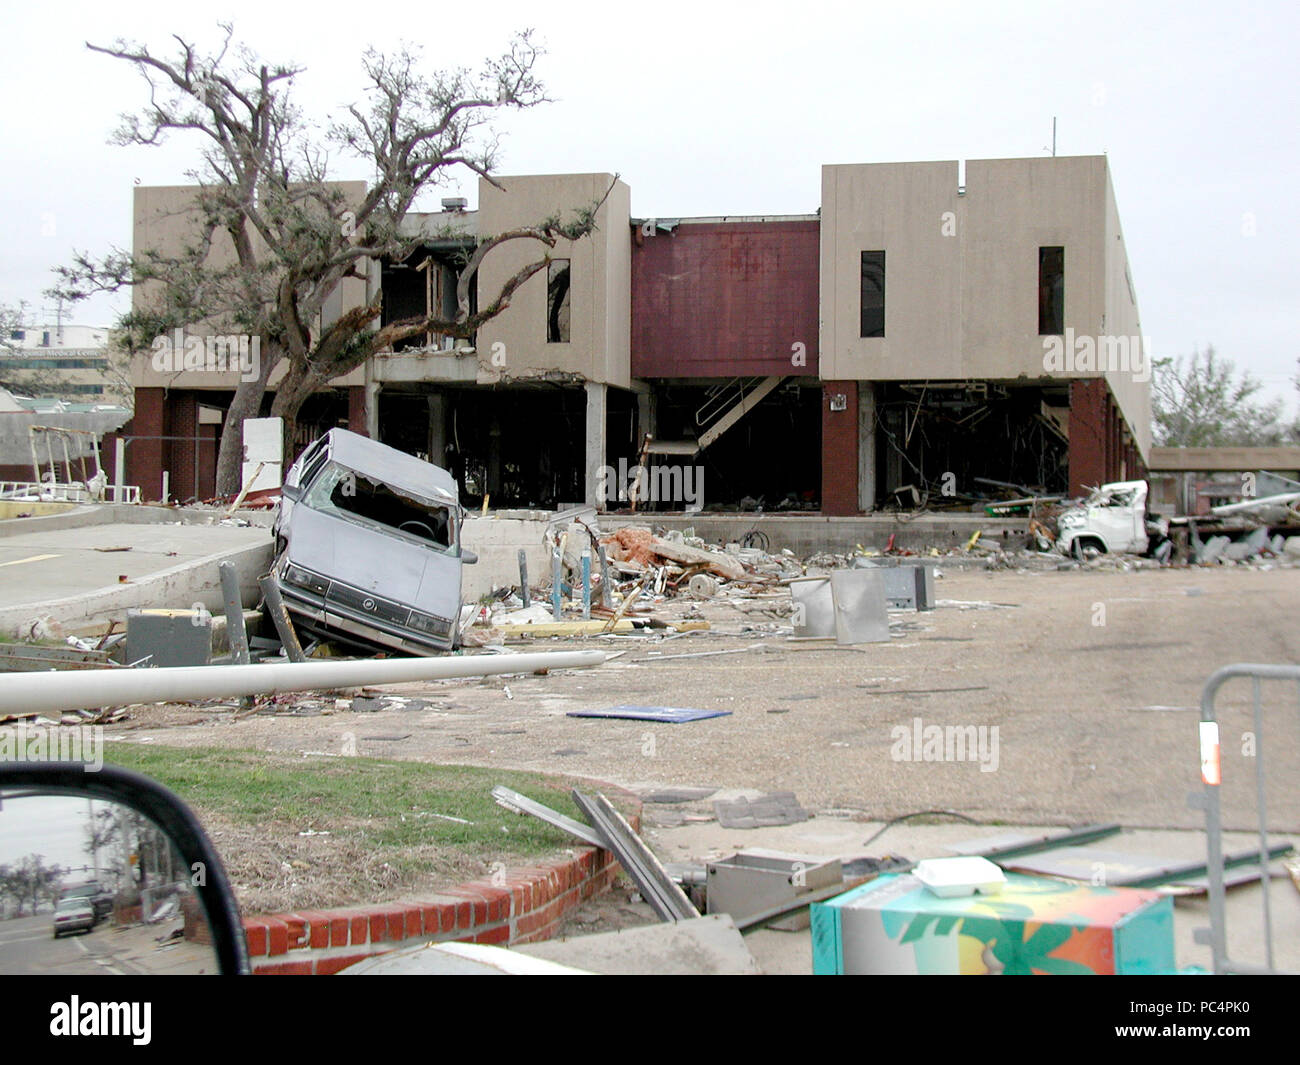 Hurricane Katrina Aftermath - Damaged commercial building Stock Photo